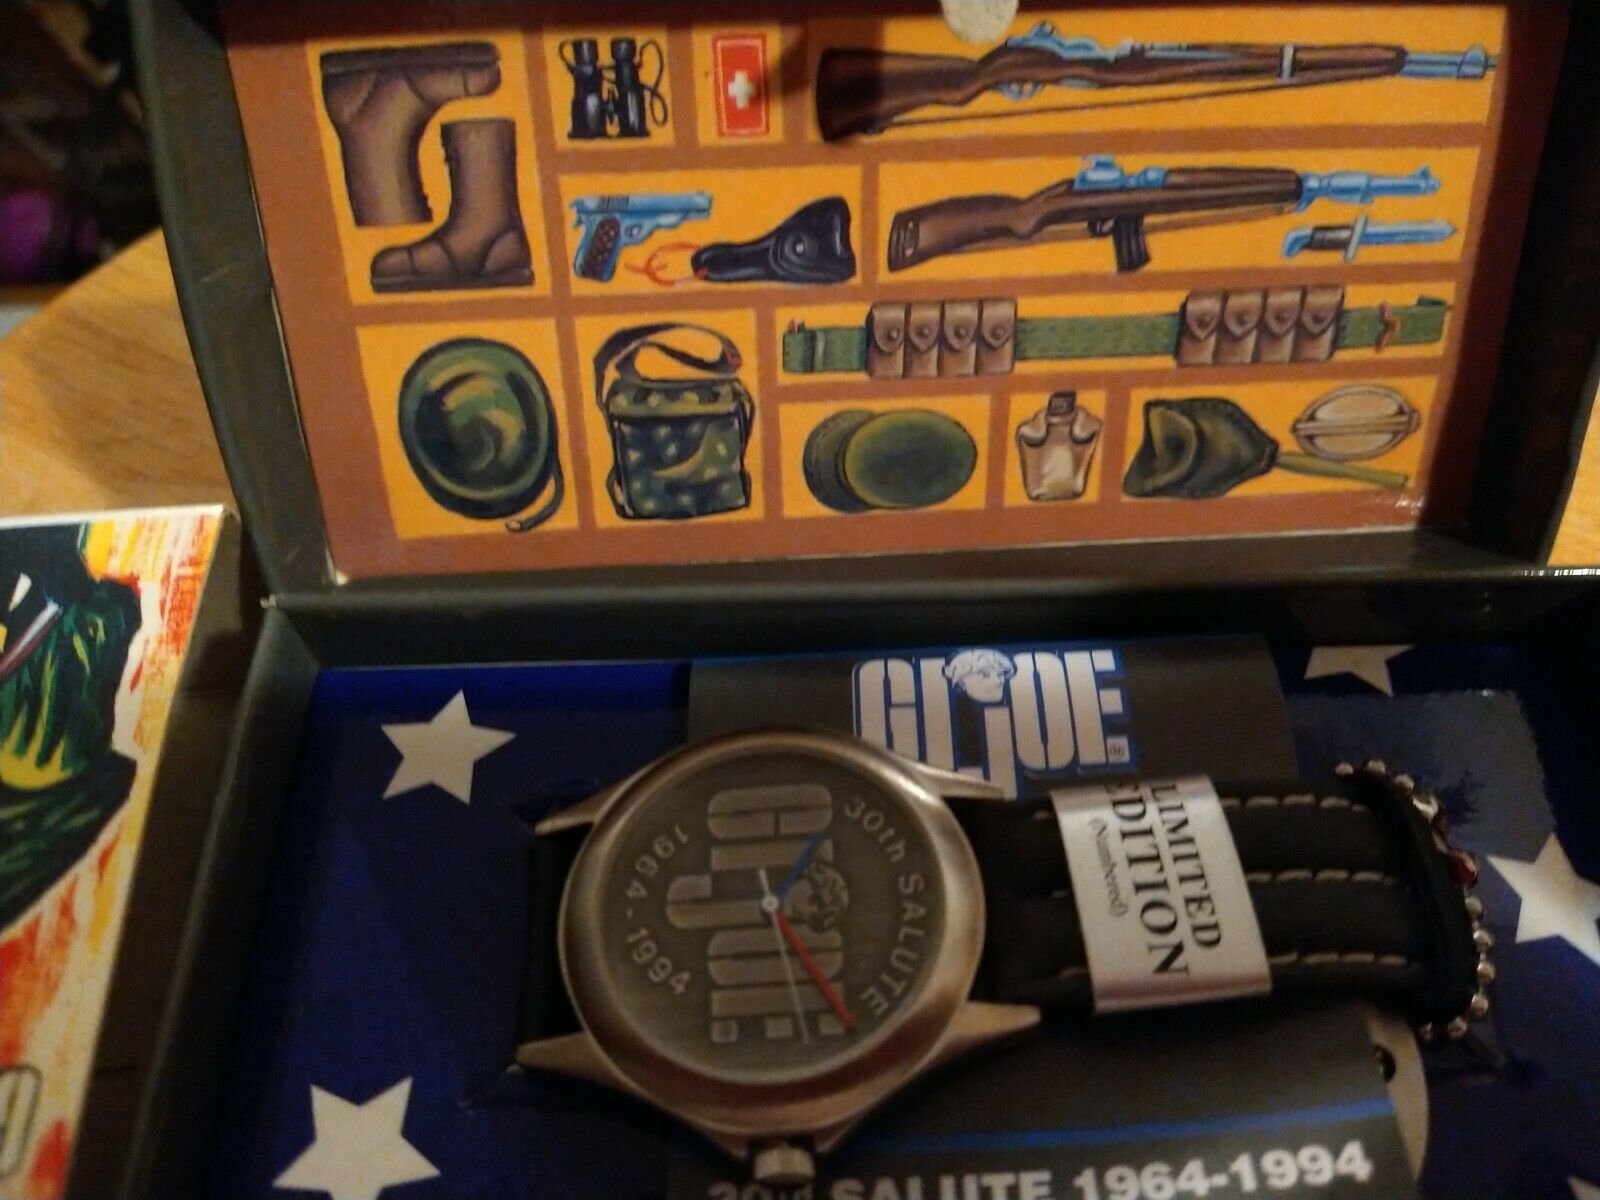 1994 Fossil Gi Joe 30th Anniversary Commemorative Watch